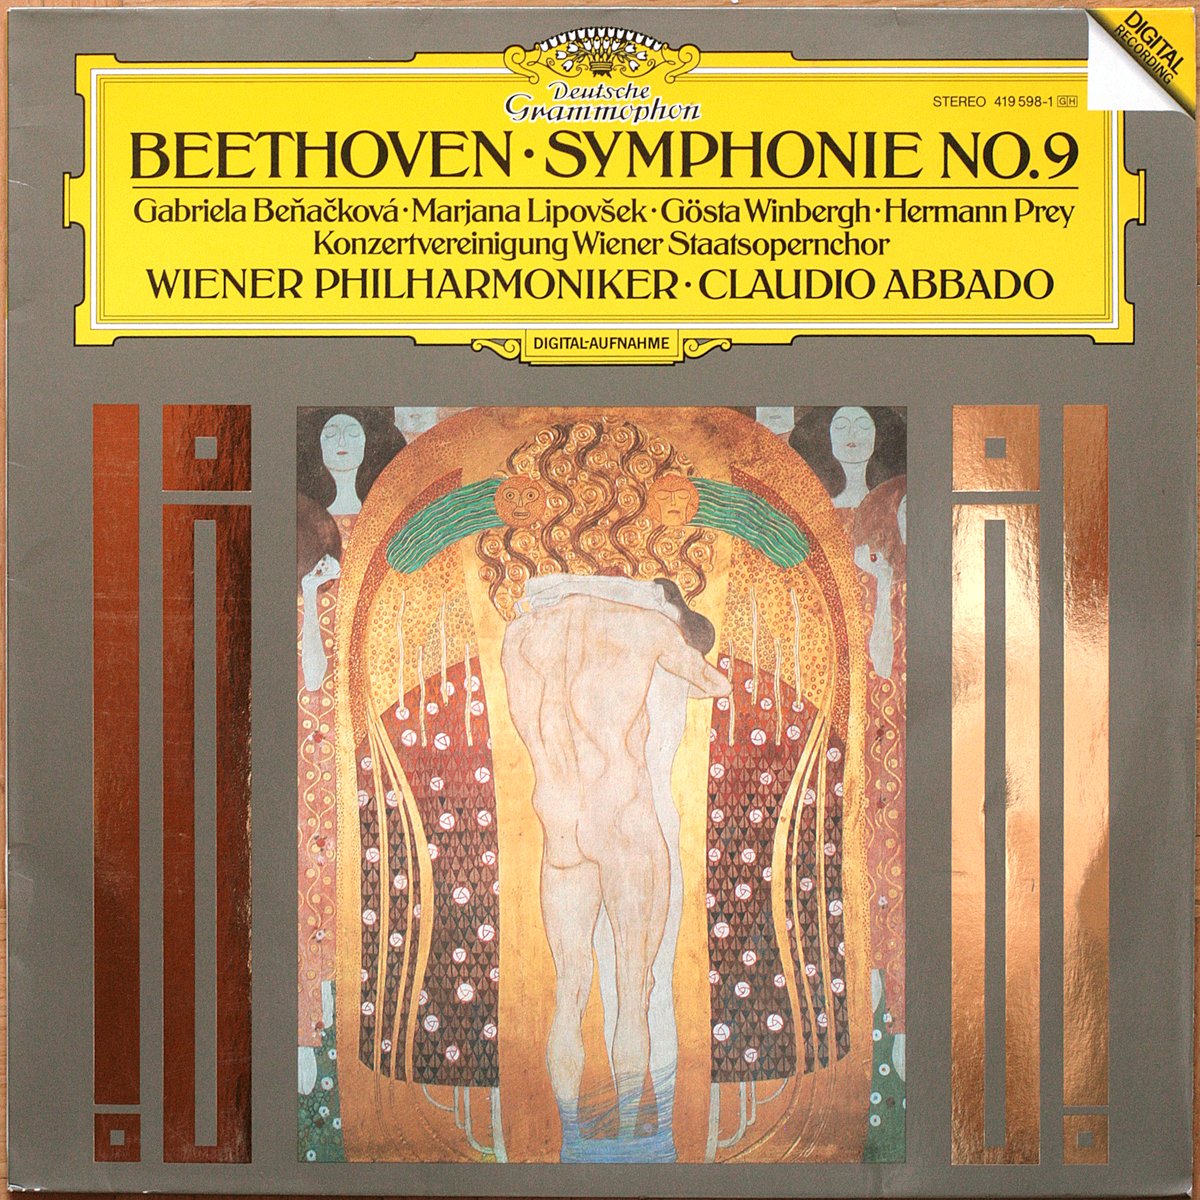 DGG 419 598 Beethoven Symphonie 9 Abbado Digital Aufnahme